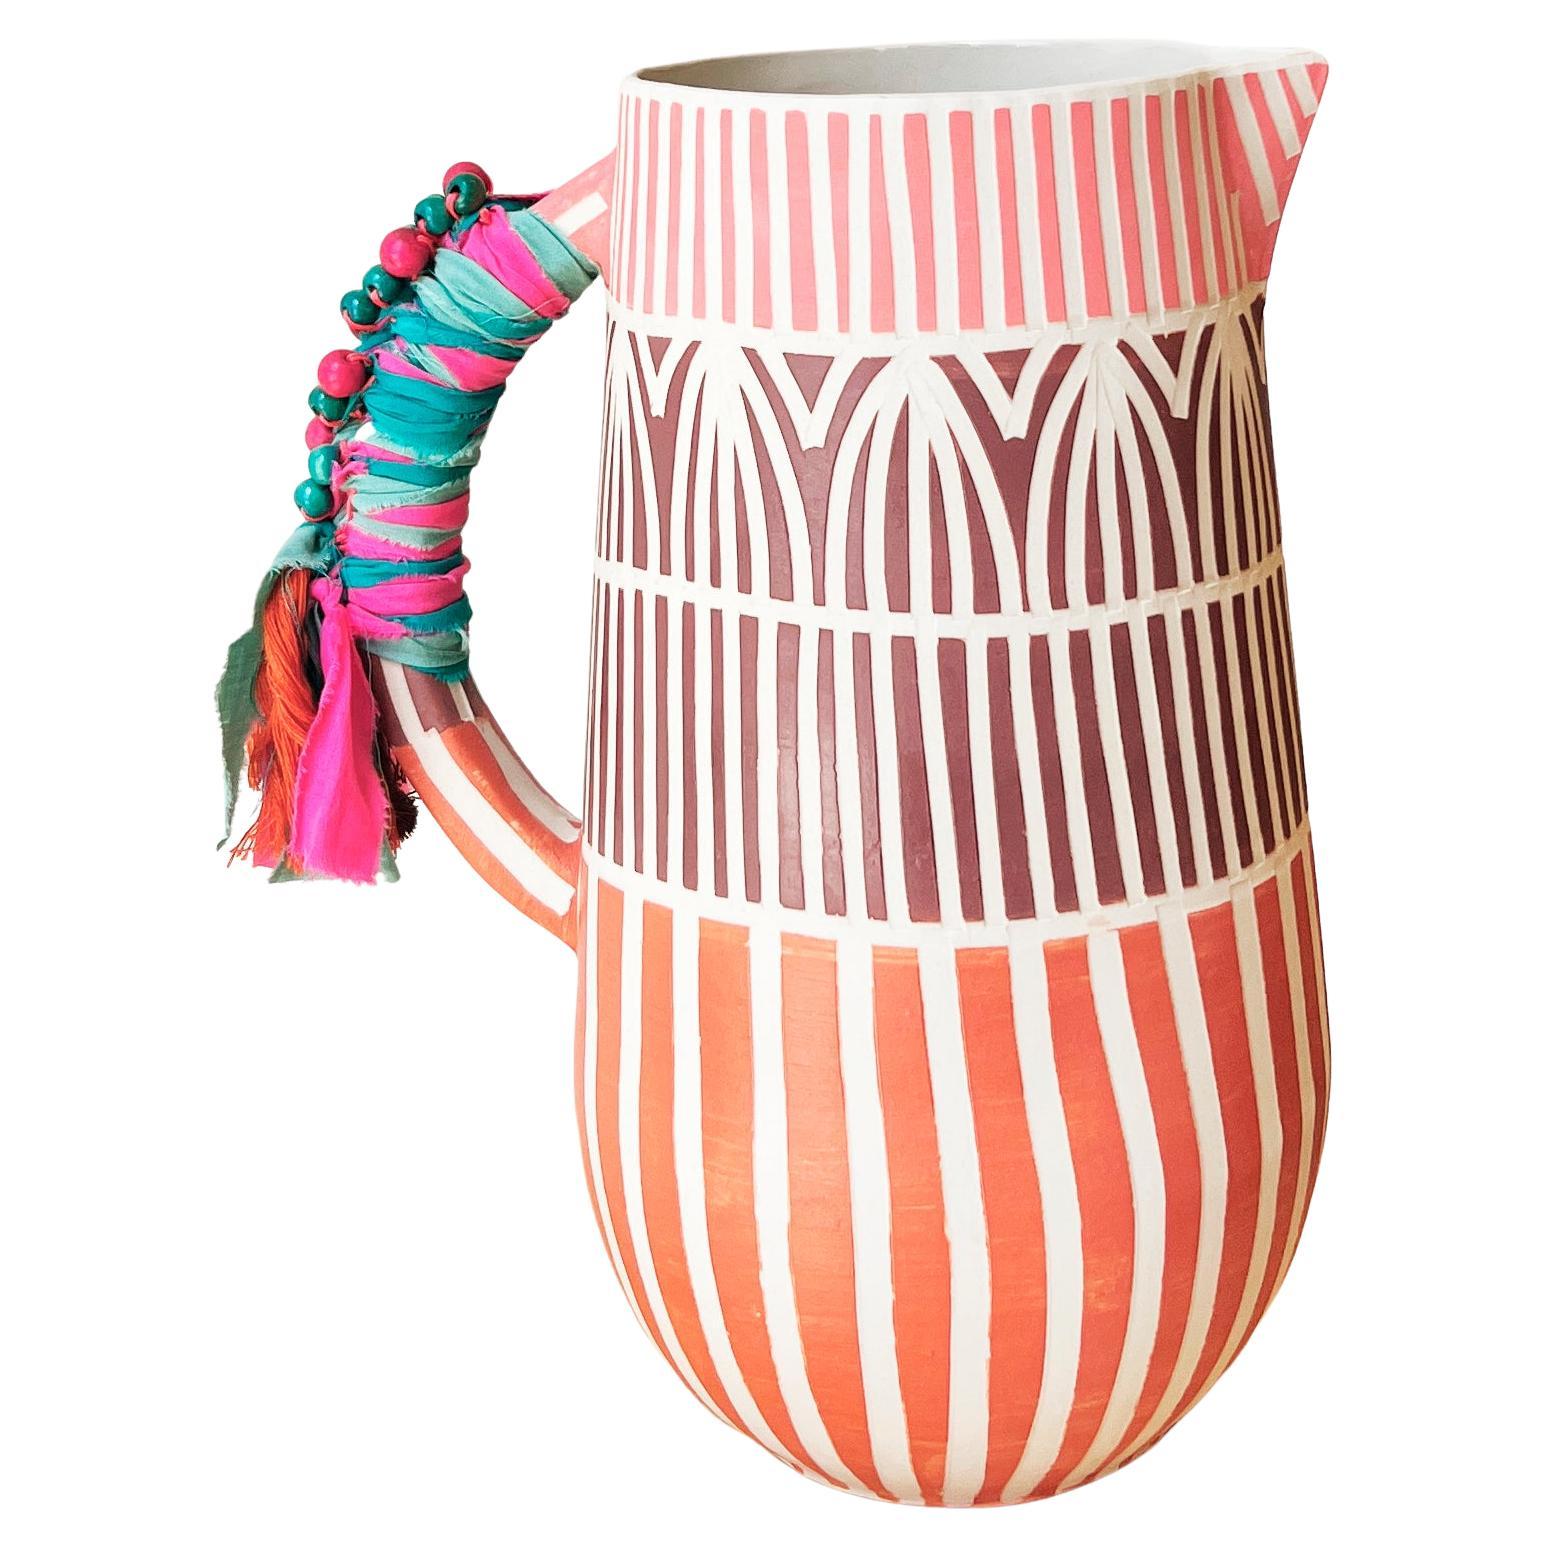 Festa Handmade Whimsical Ceramic Jug in White and Pink Stripes